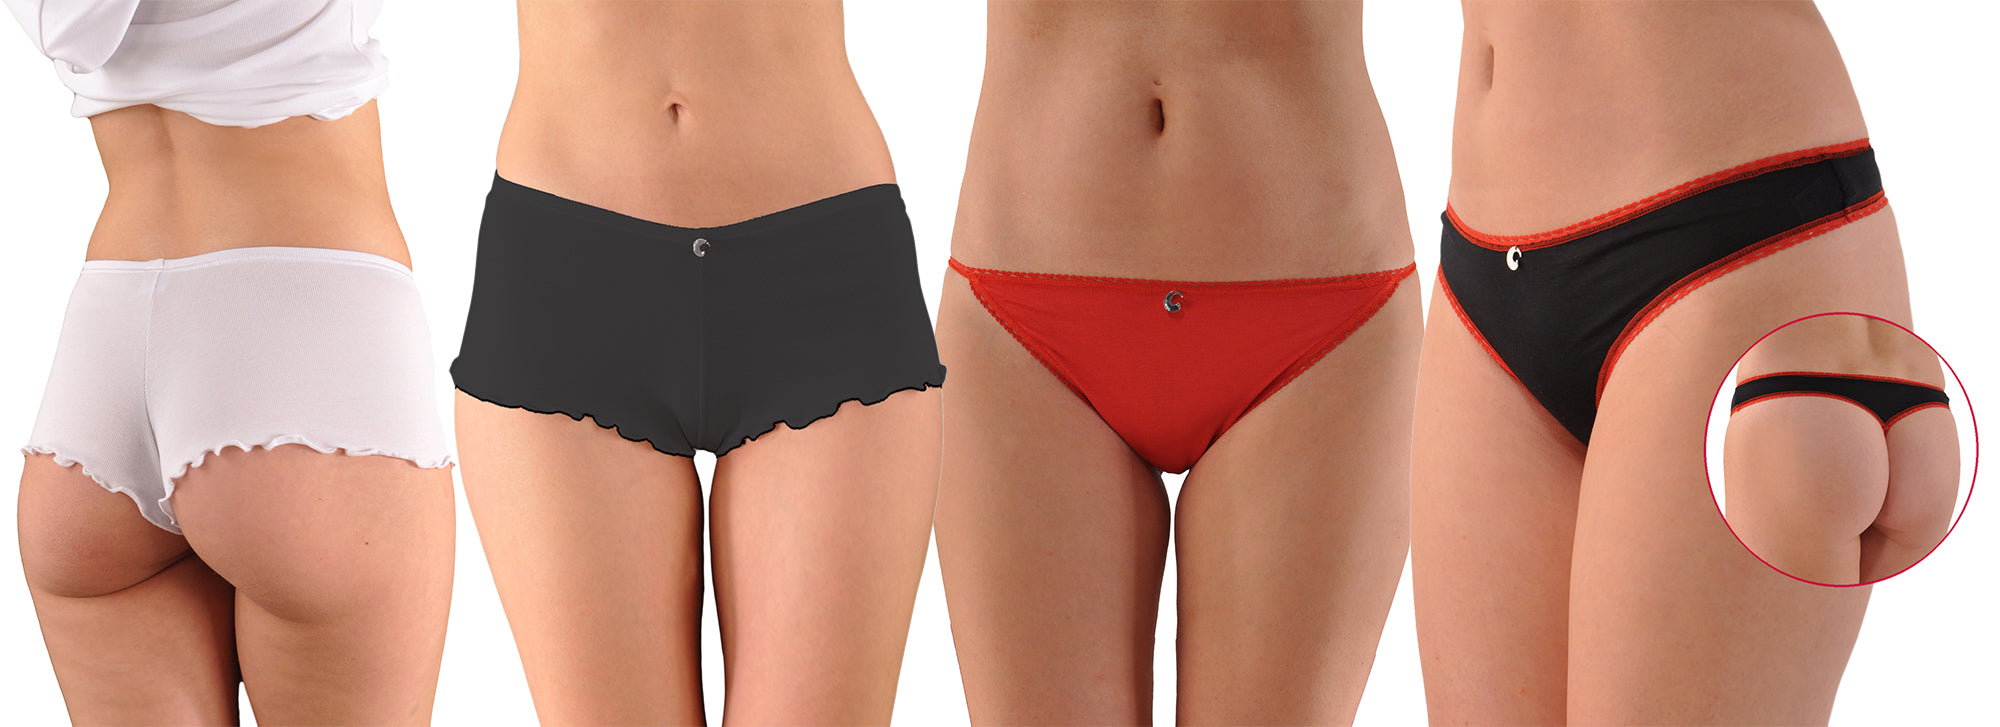 Do women really dislike guys in skimpy underwear and swimwear? - The Bottom  Drawer